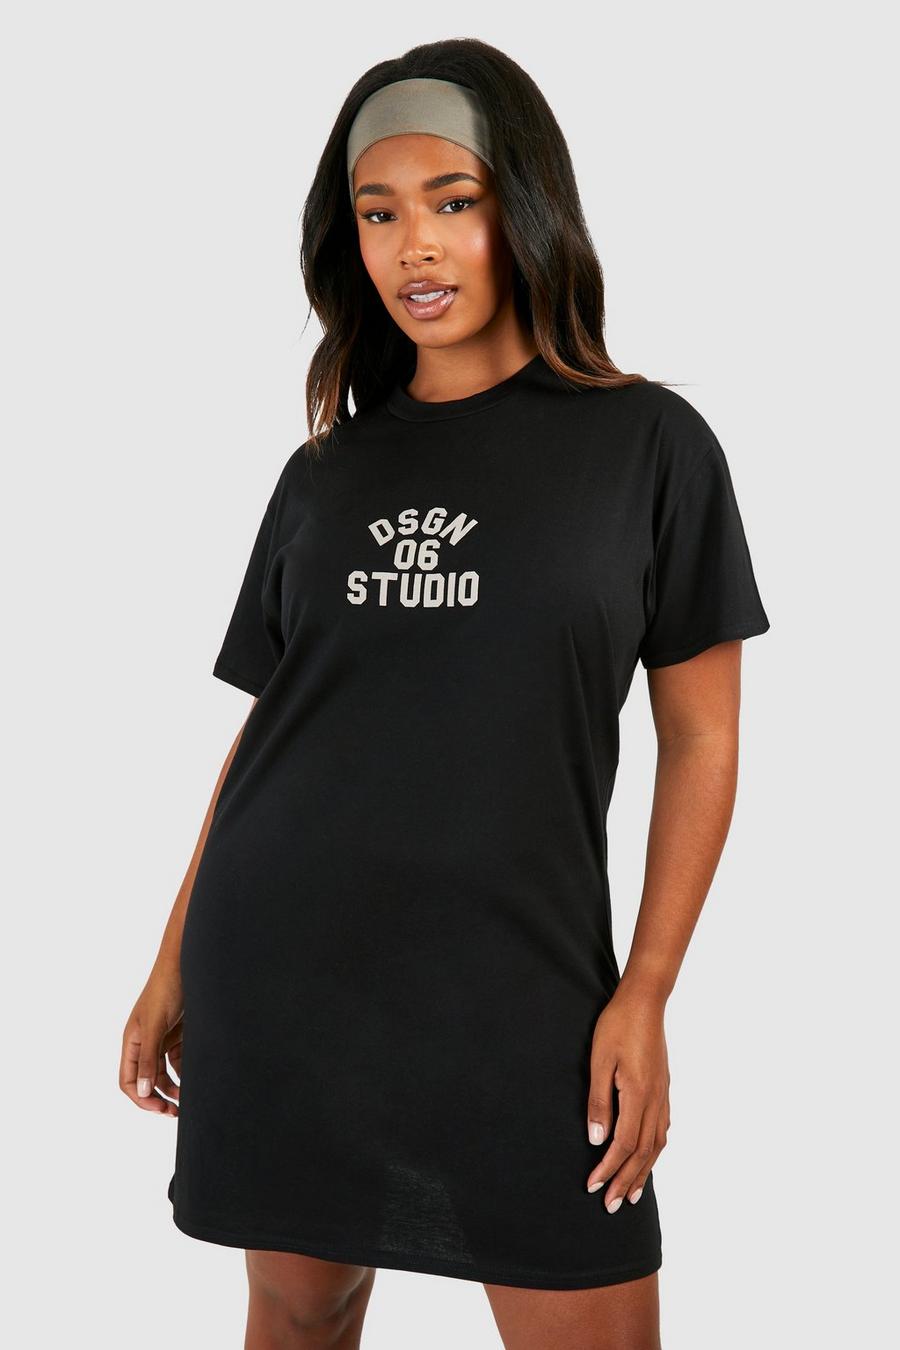 Black Plus Dsgn Studio Graphic T-Shirt Dress image number 1